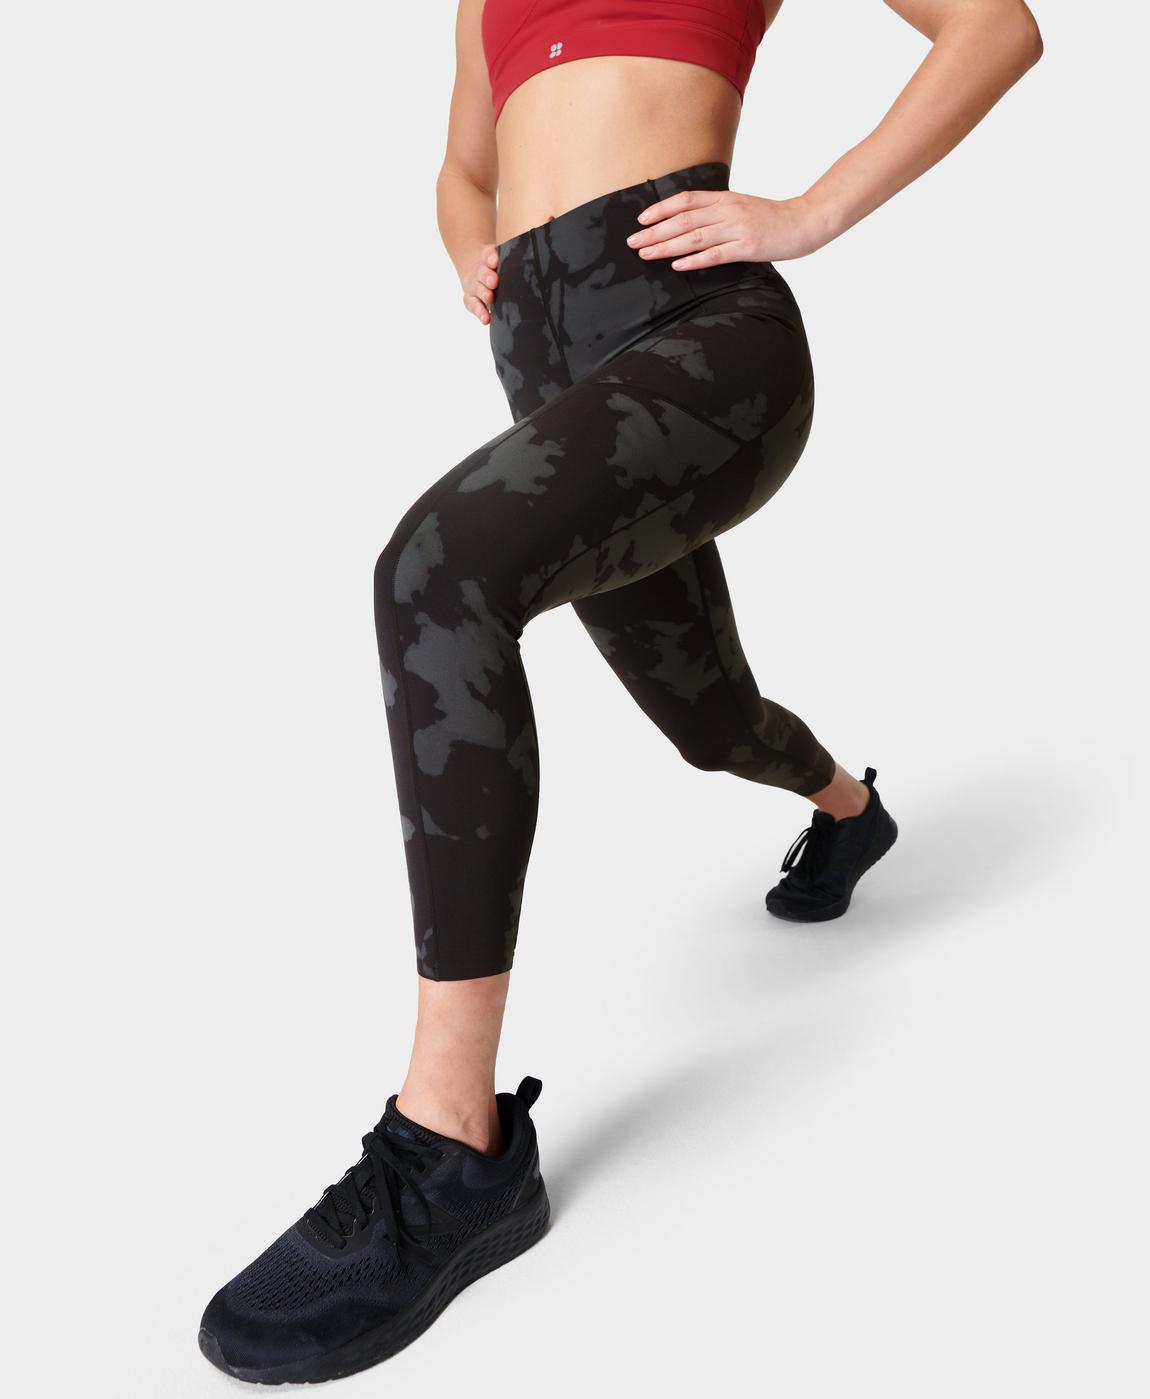 Power UltraSculpt High-Waisted 7/8 Workout Leggings - Black Fade Print, Women's Leggings